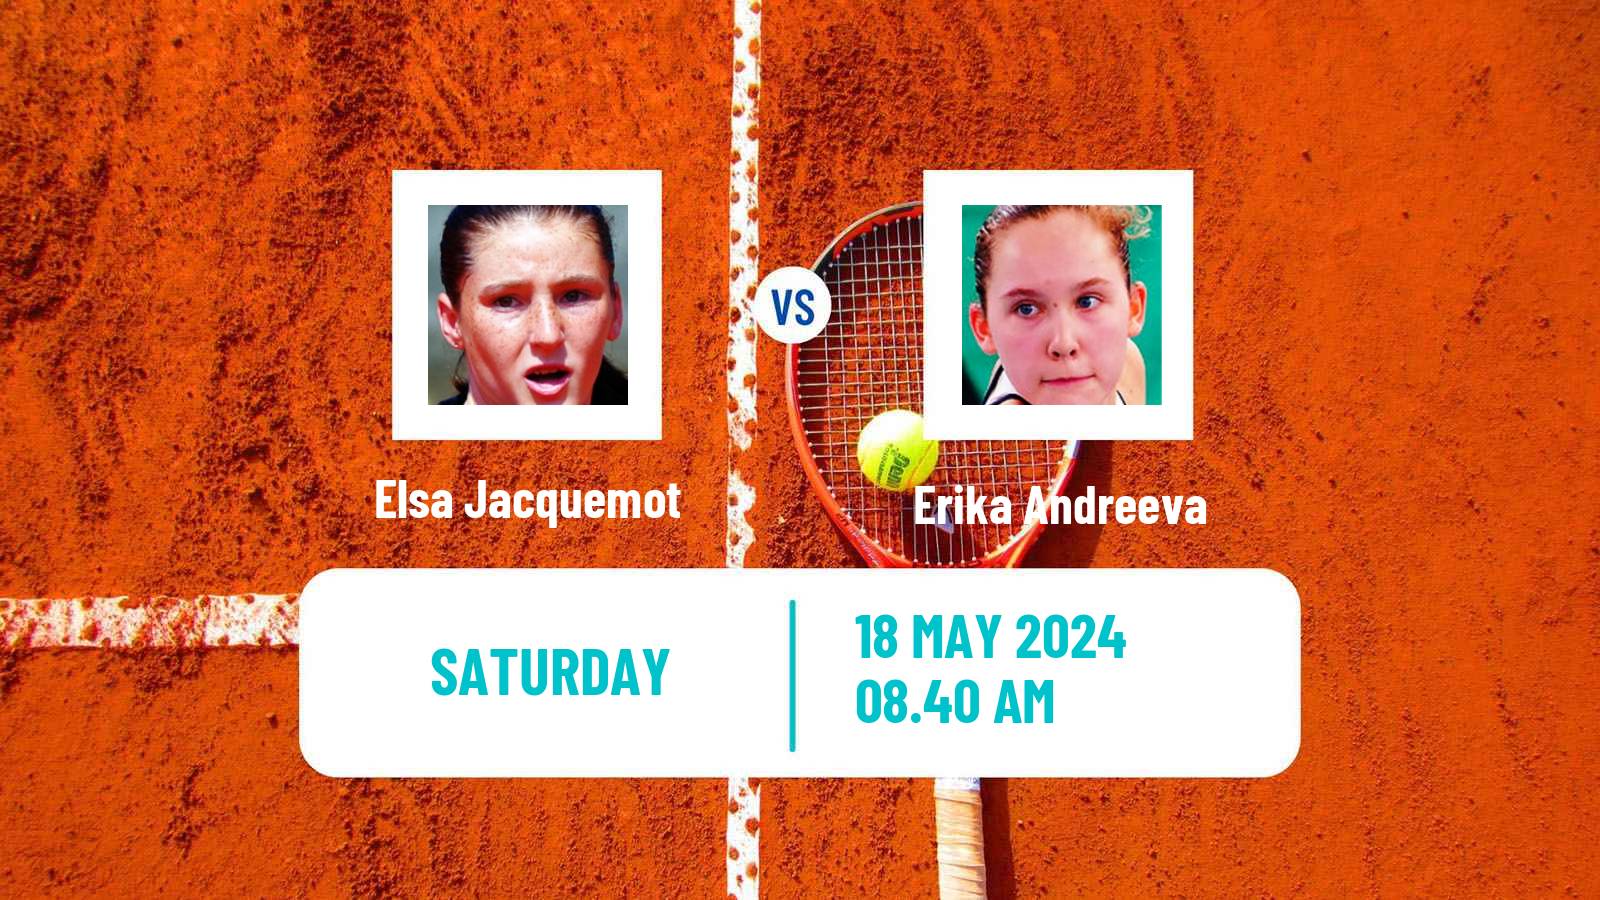 Tennis WTA Strasbourg Elsa Jacquemot - Erika Andreeva